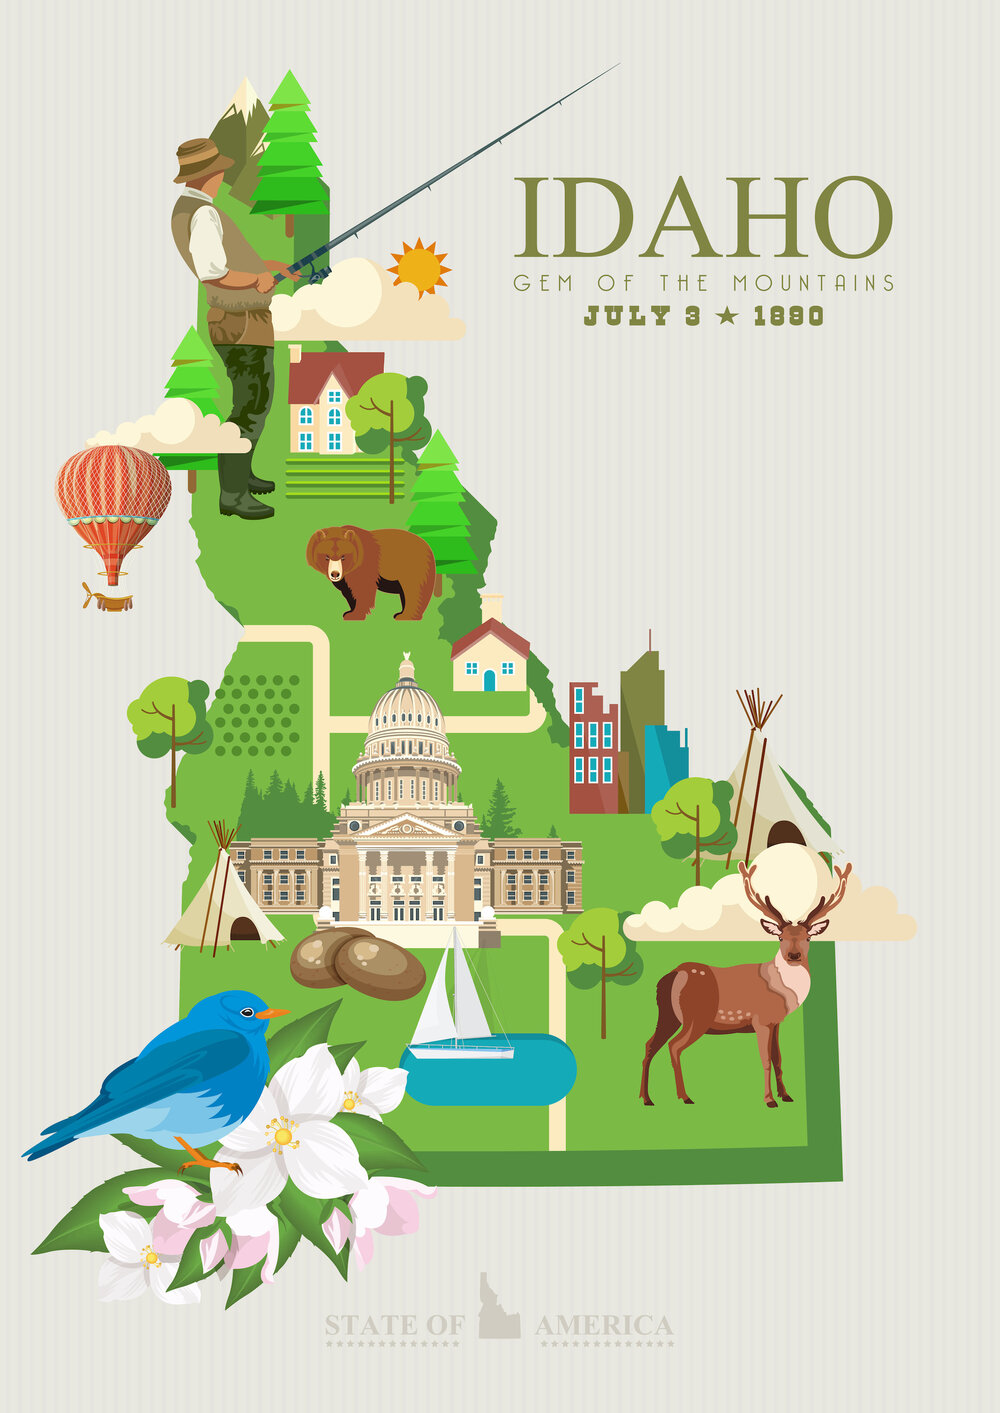 Idaho History Boise Area